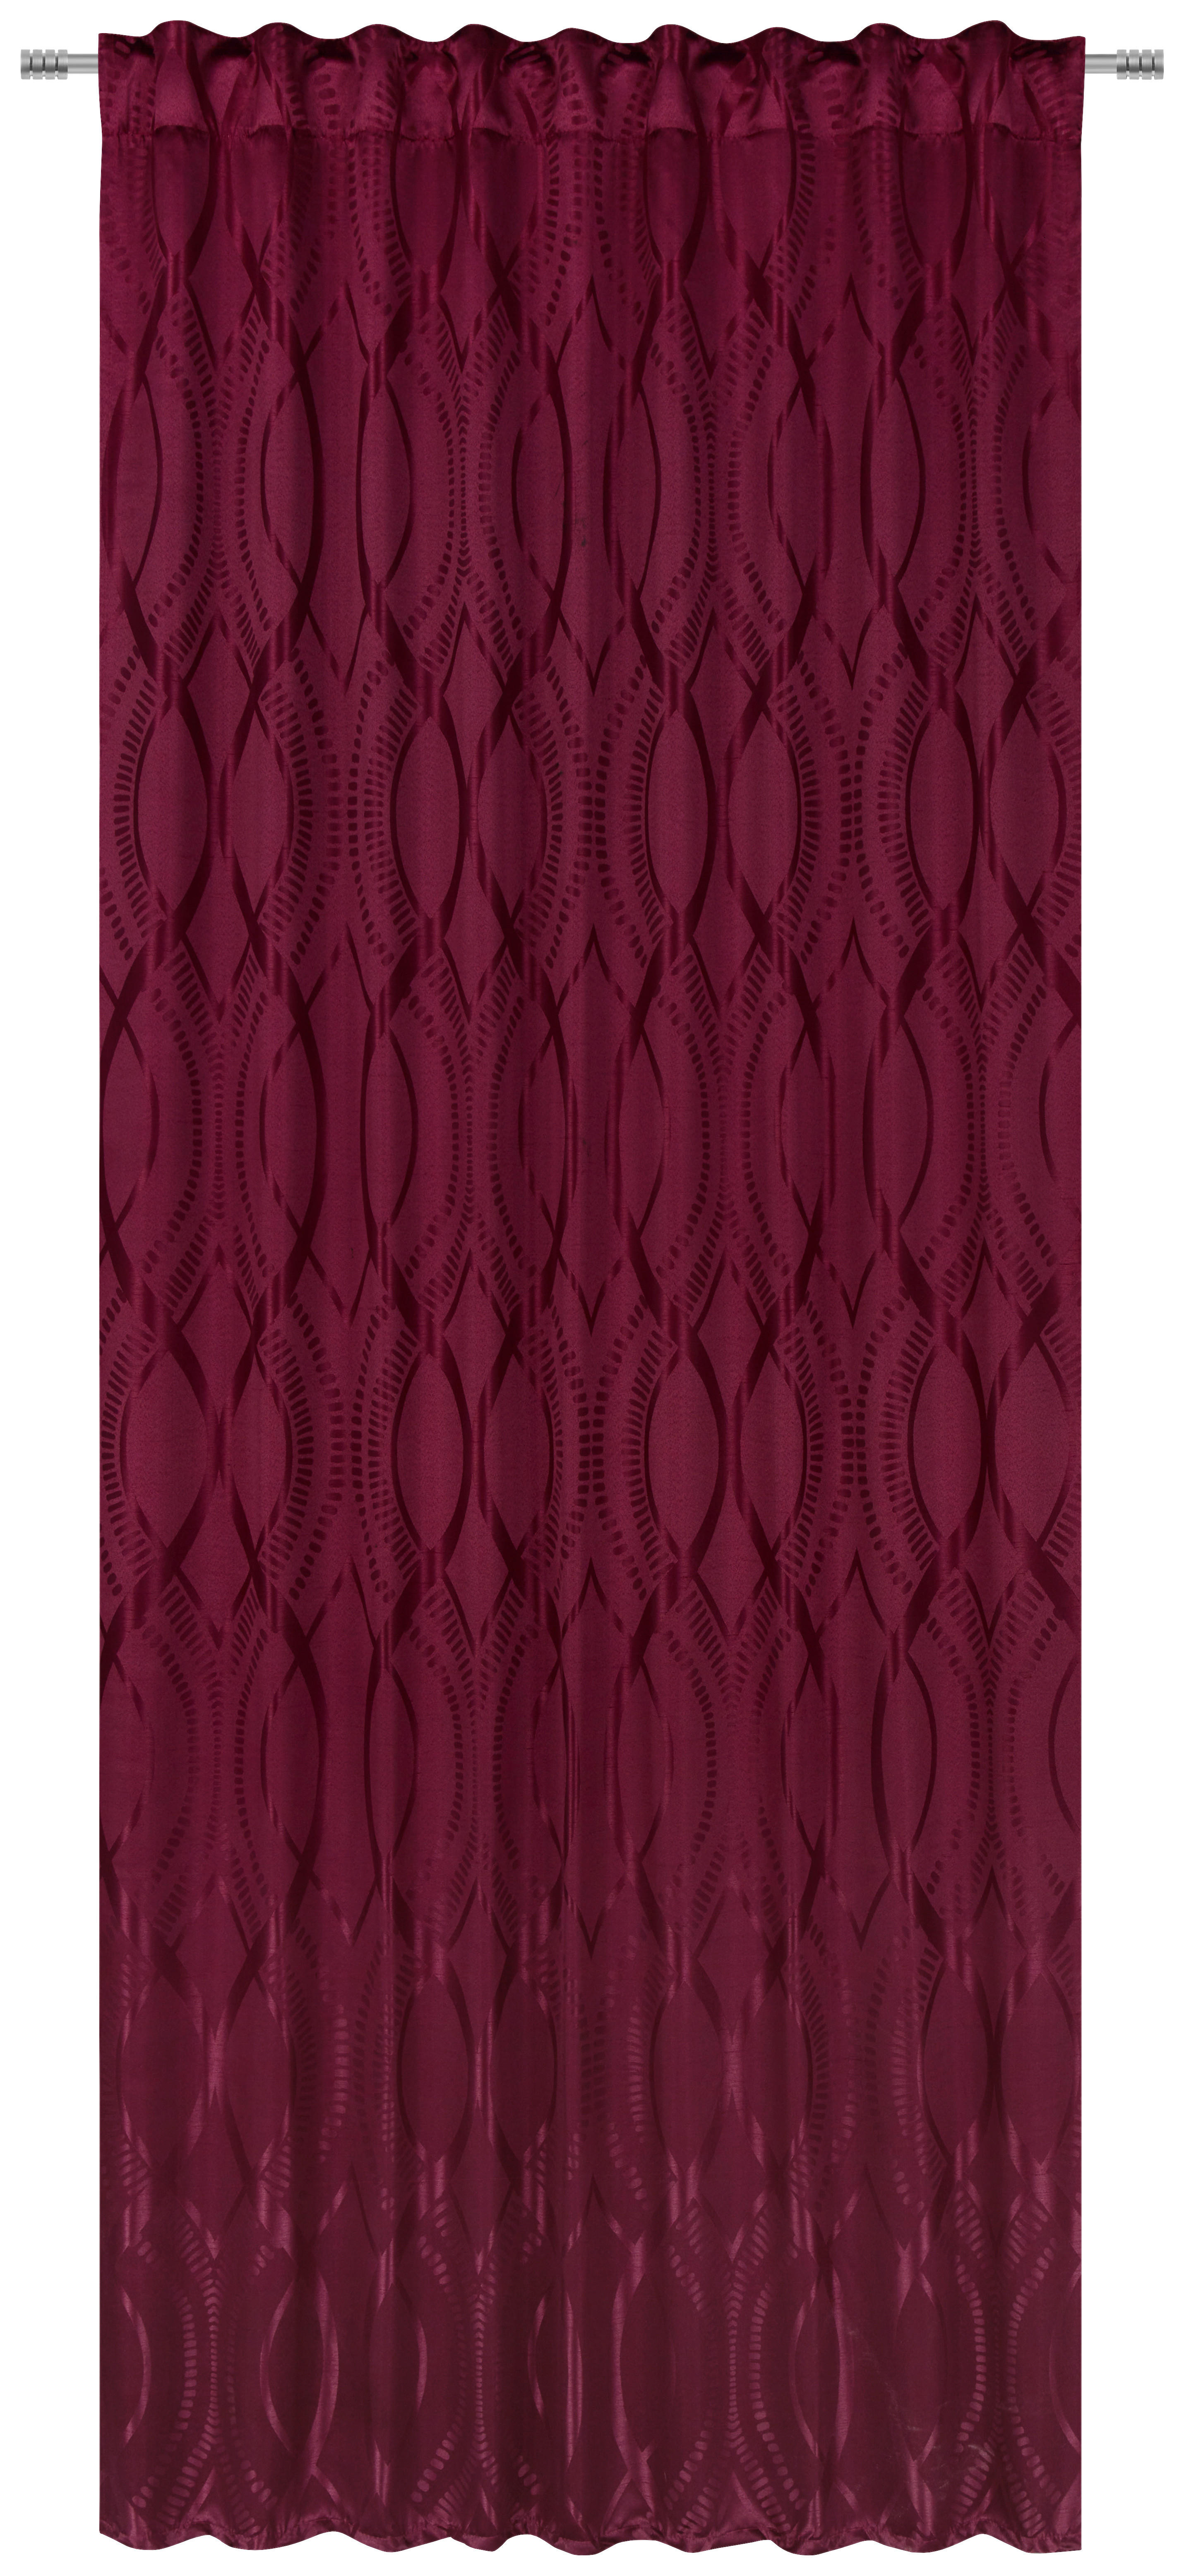 FERTIGVORHANG blickdicht  - Beere, Konventionell, Textil (140/245cm) - Esposa